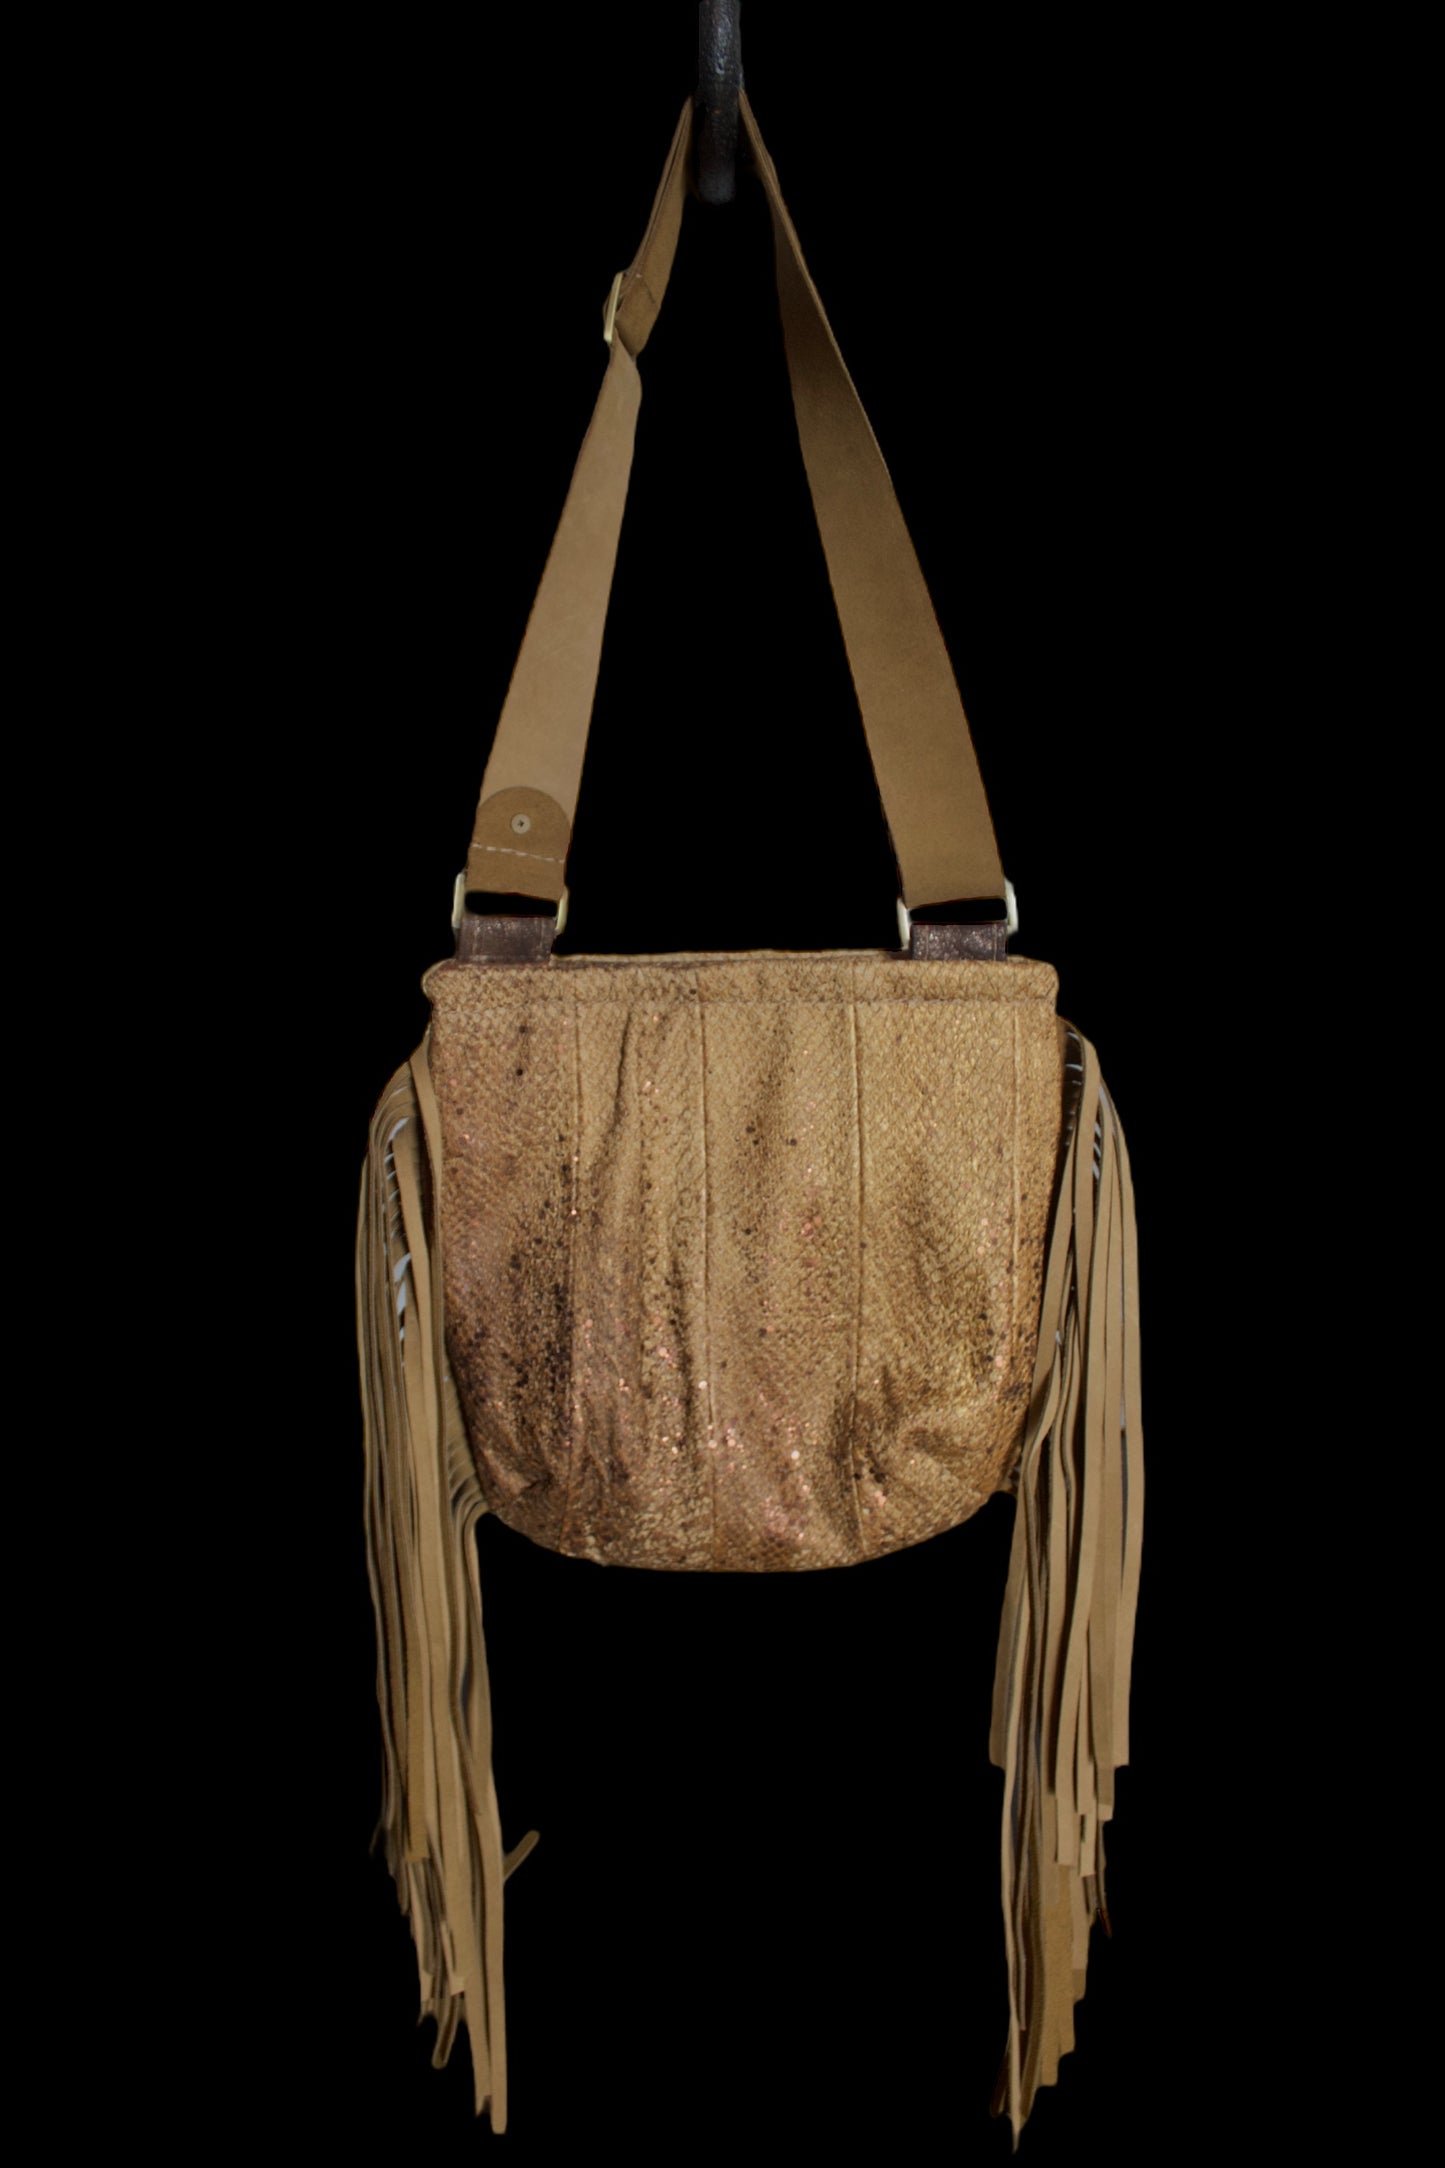 Mana Fish Leather “Jelly” Bag